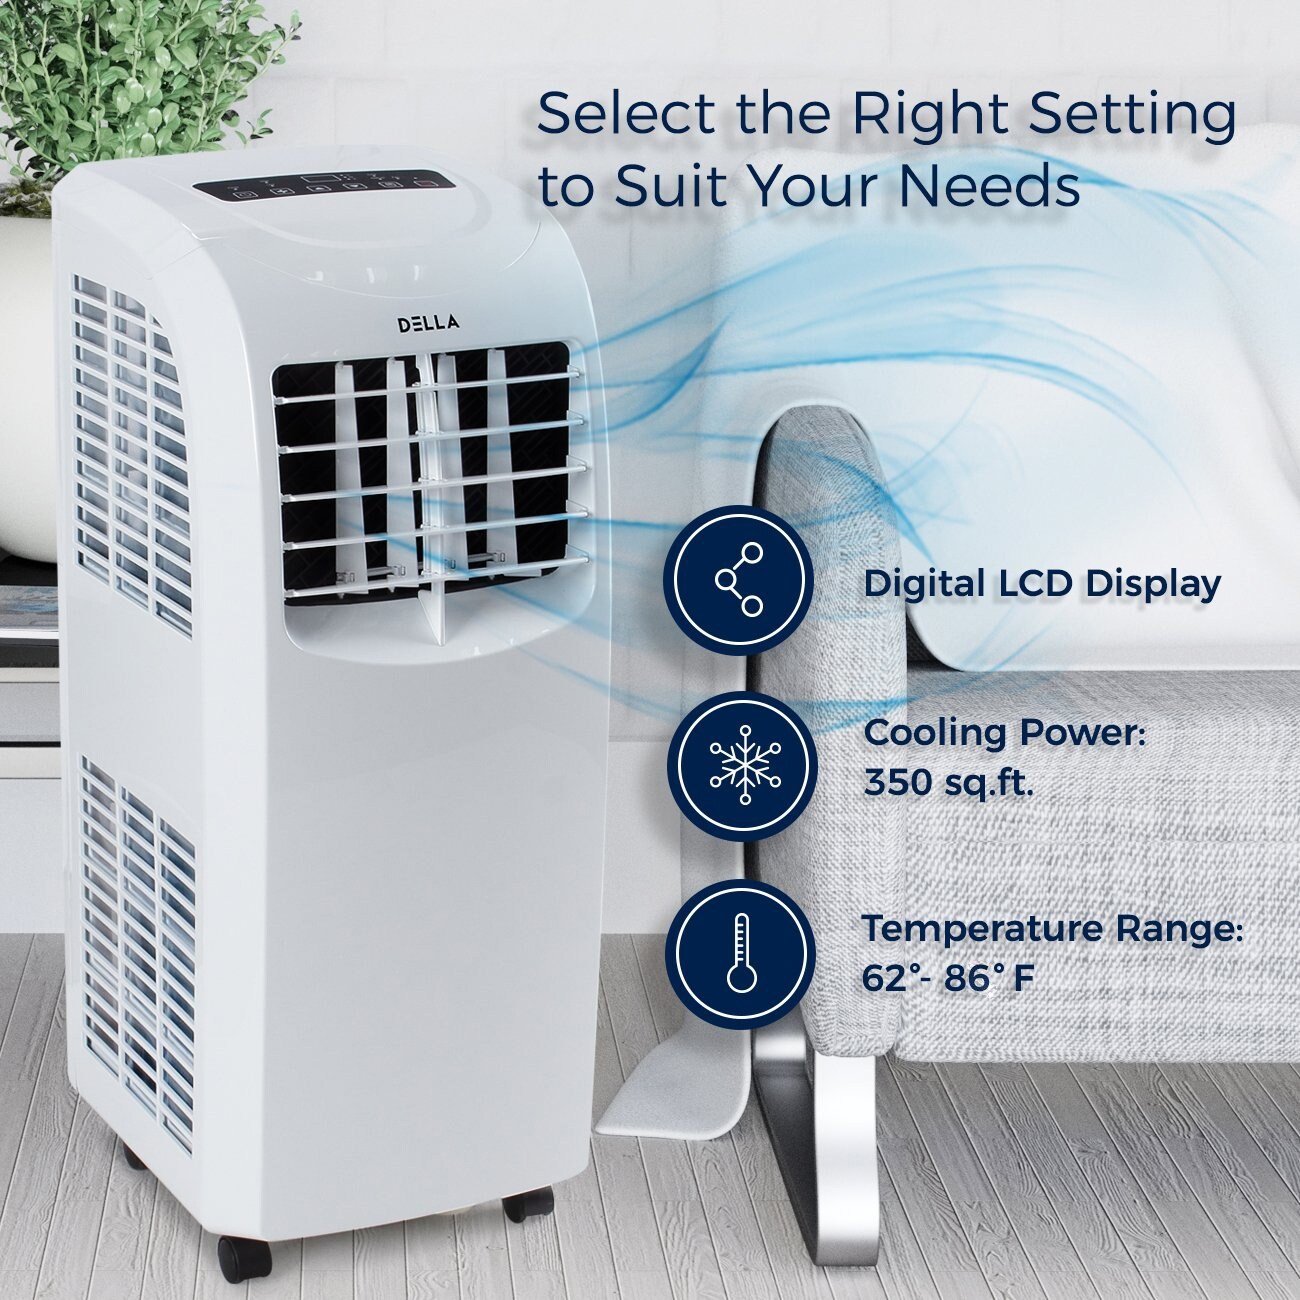 DELLA 14000 BTU Portable AC Heater Dehumidifier Fan Self Evaporating -  standard - Bed Bath & Beyond - 22893565